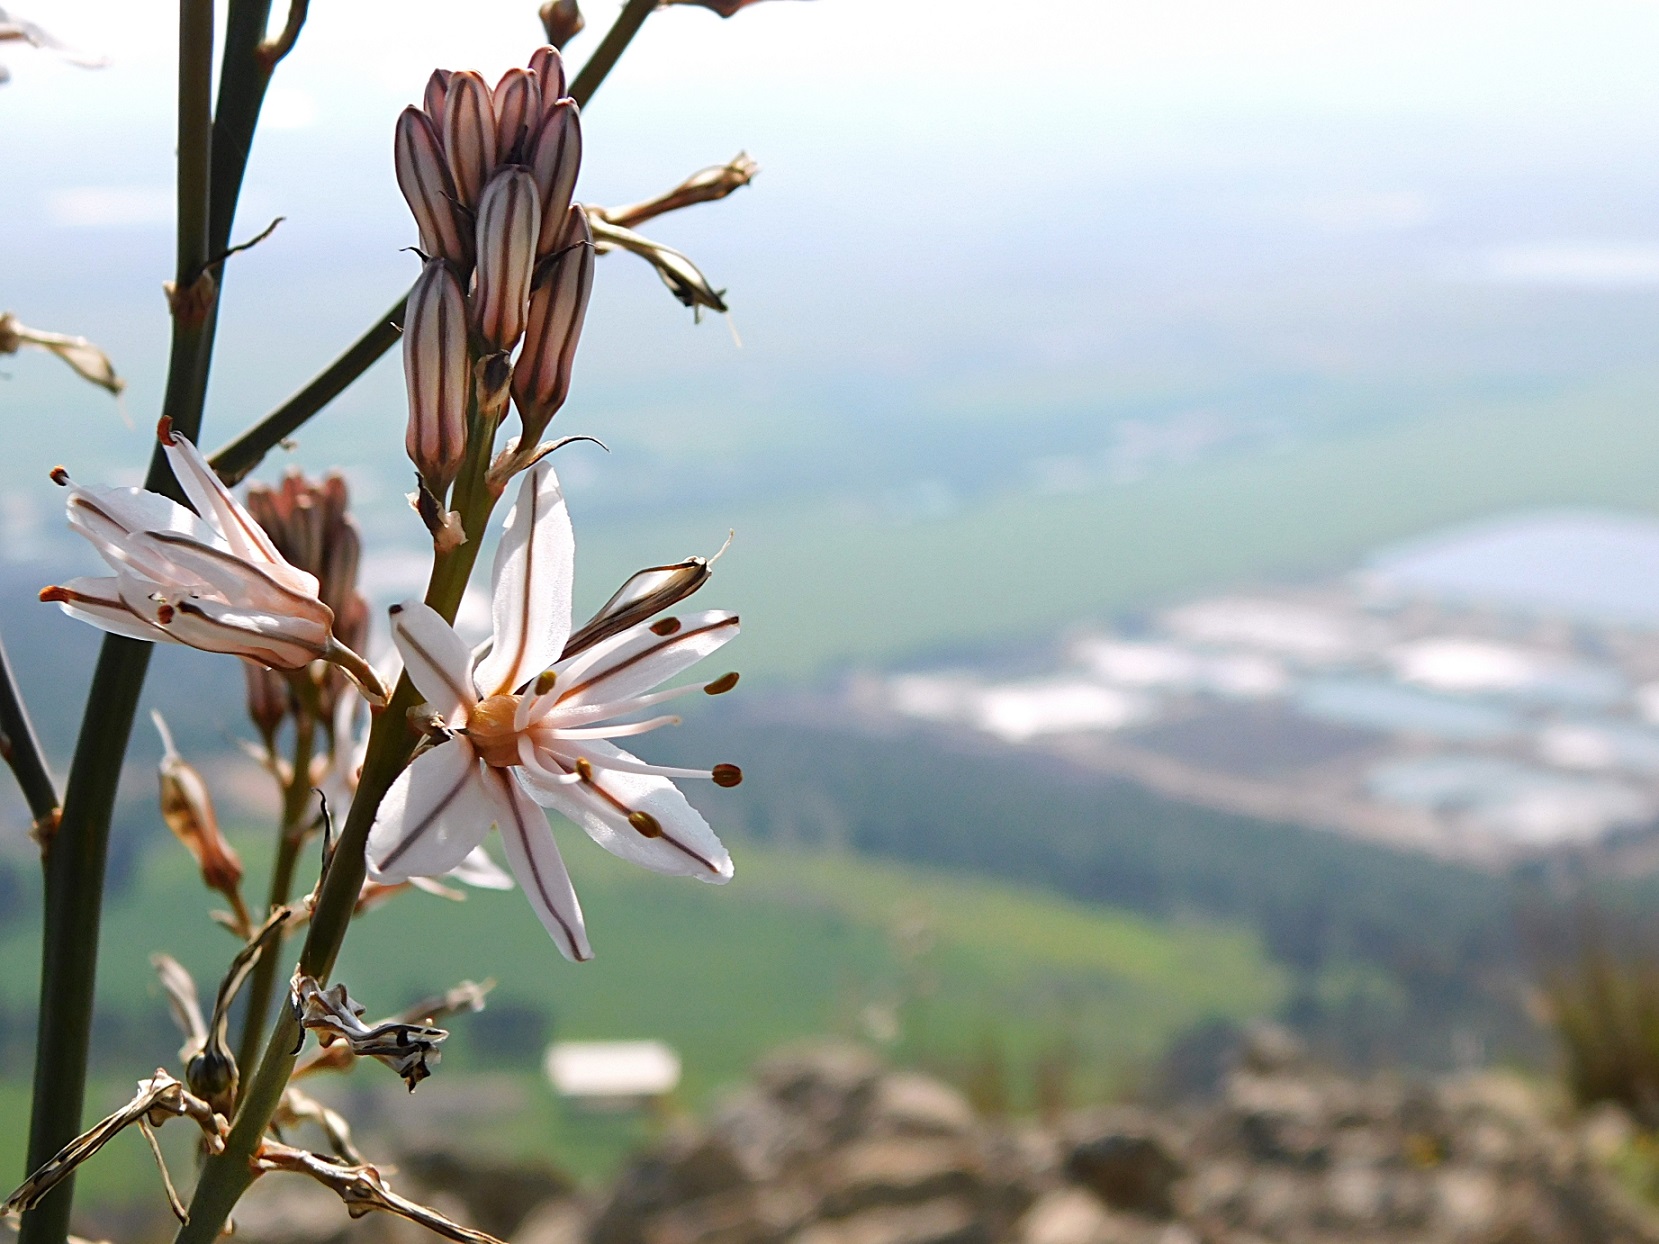 Mount of Precipice, photo credit Sr. Amata CSFN / Góra Strącenia w pobliżu Nazaretu, fot. s. Amata CSFN